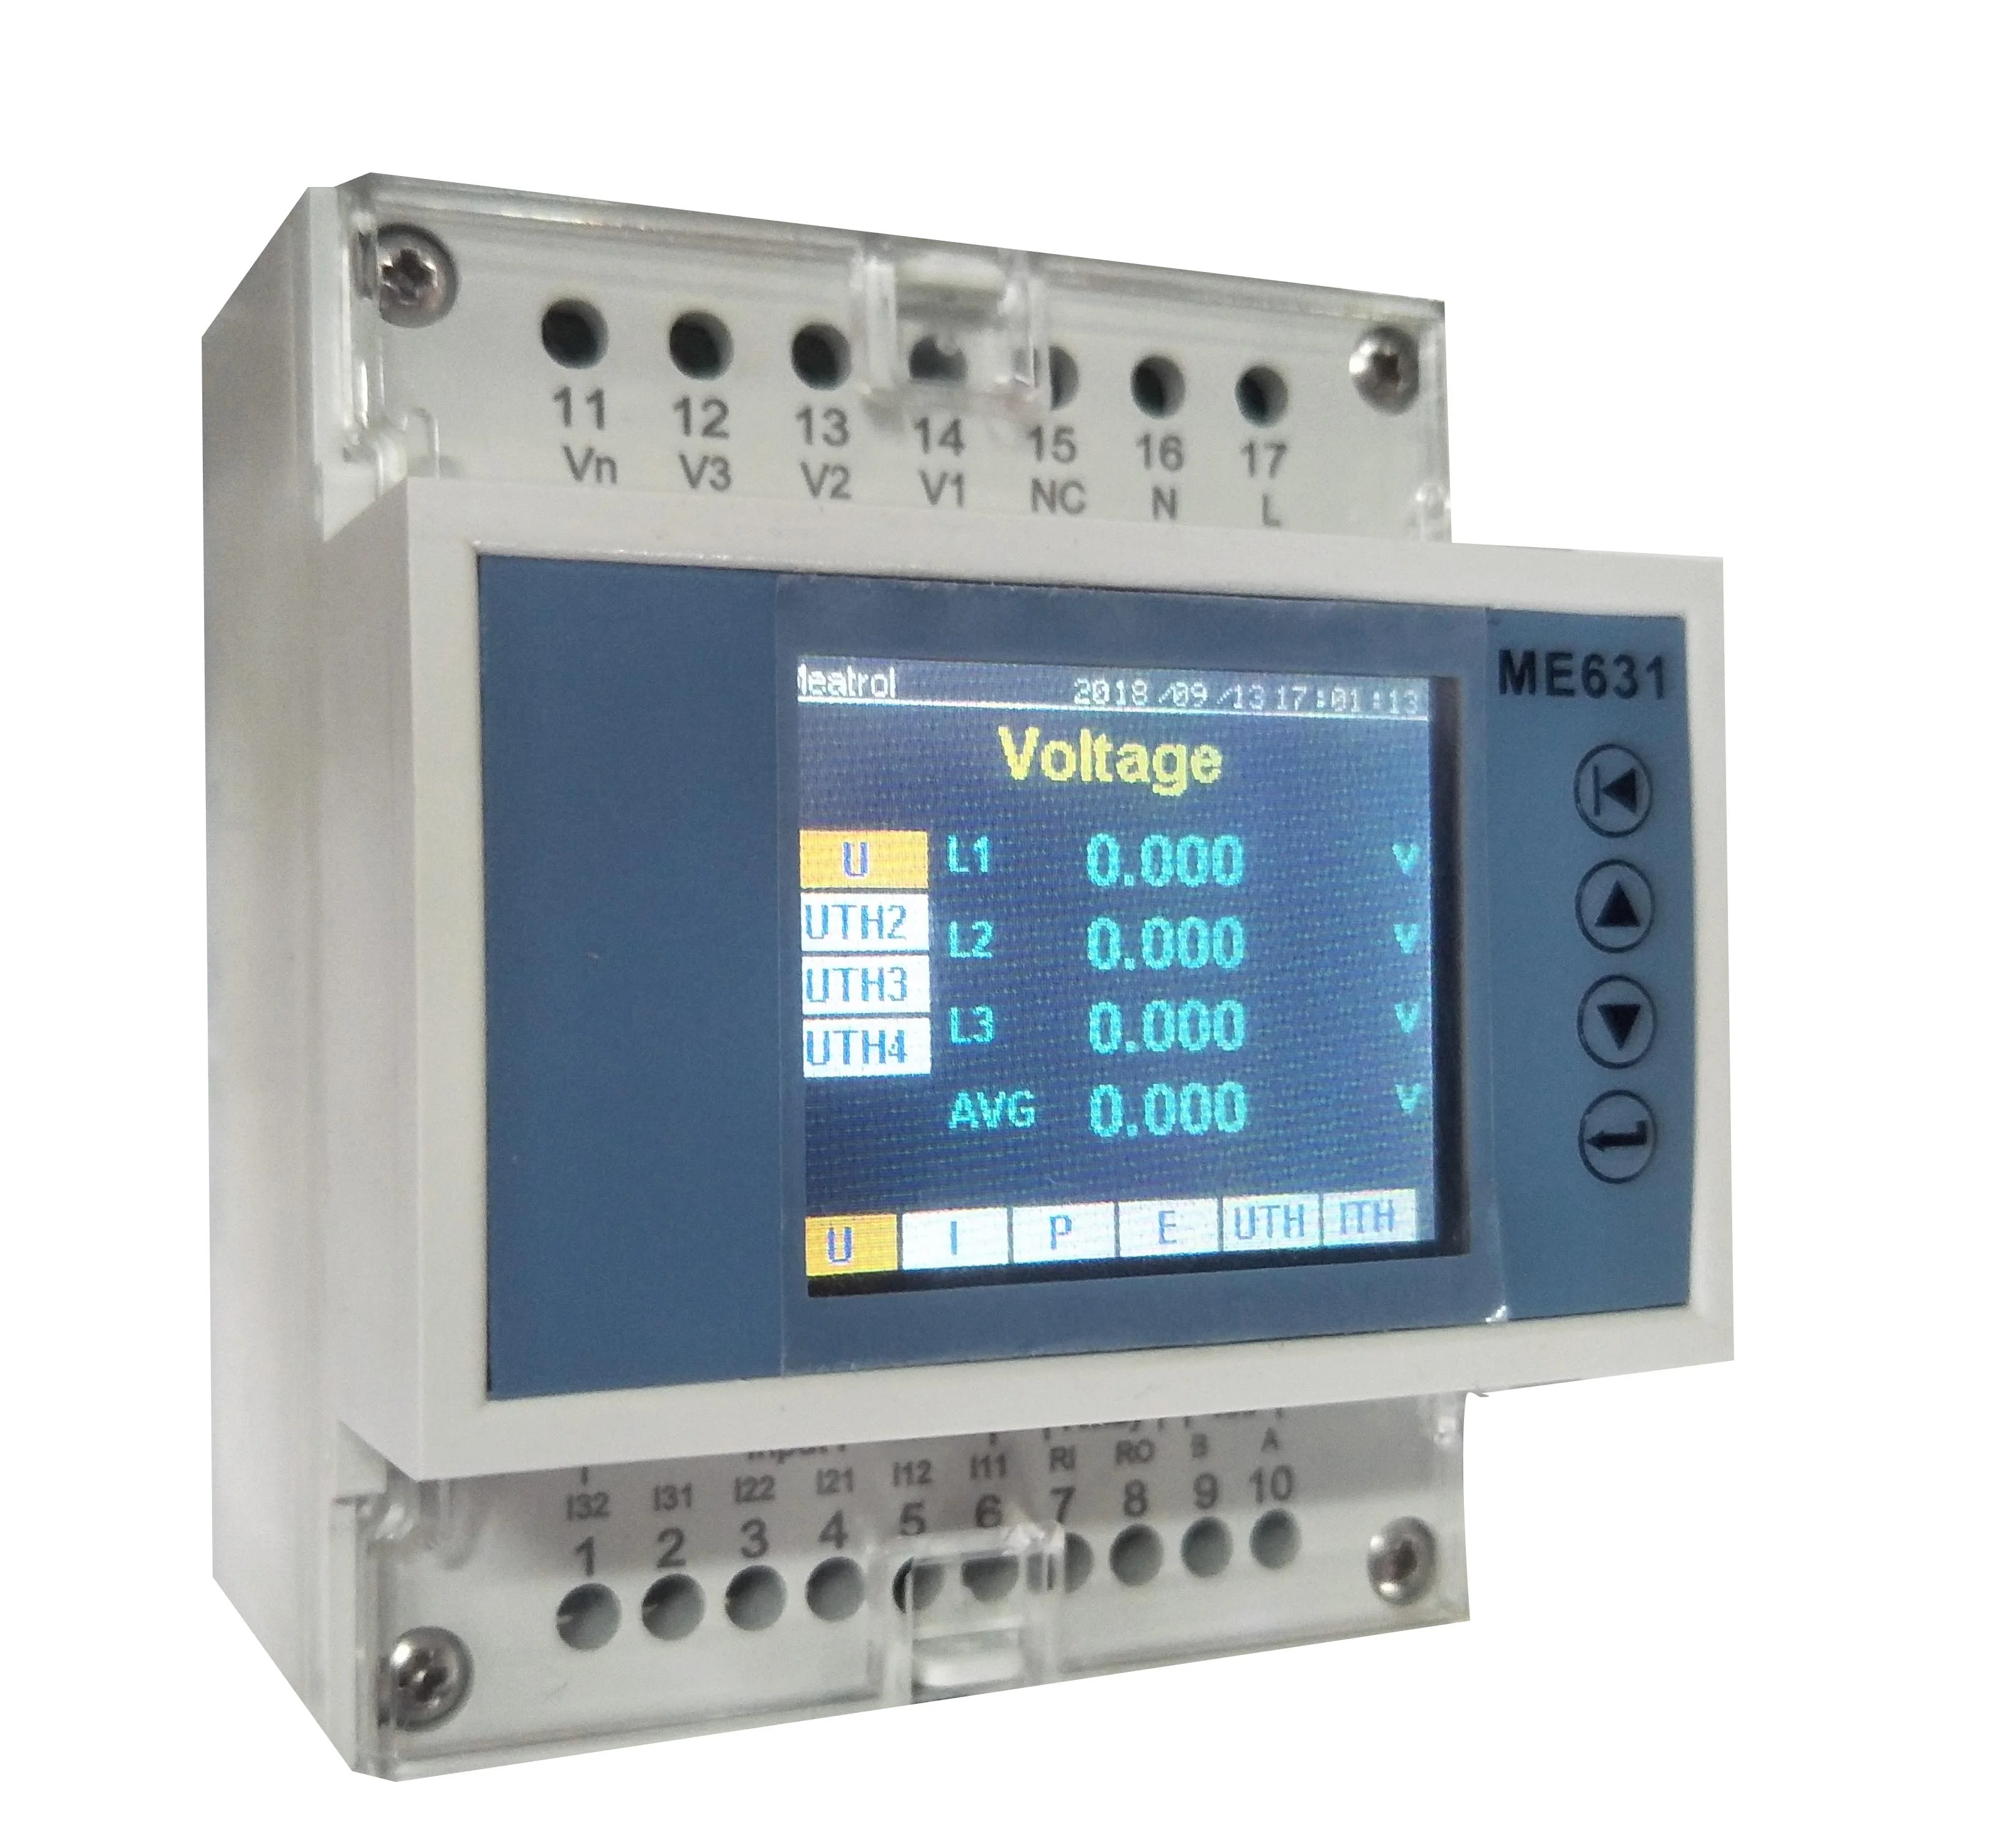 
High Quality Rogowski digital power meter 